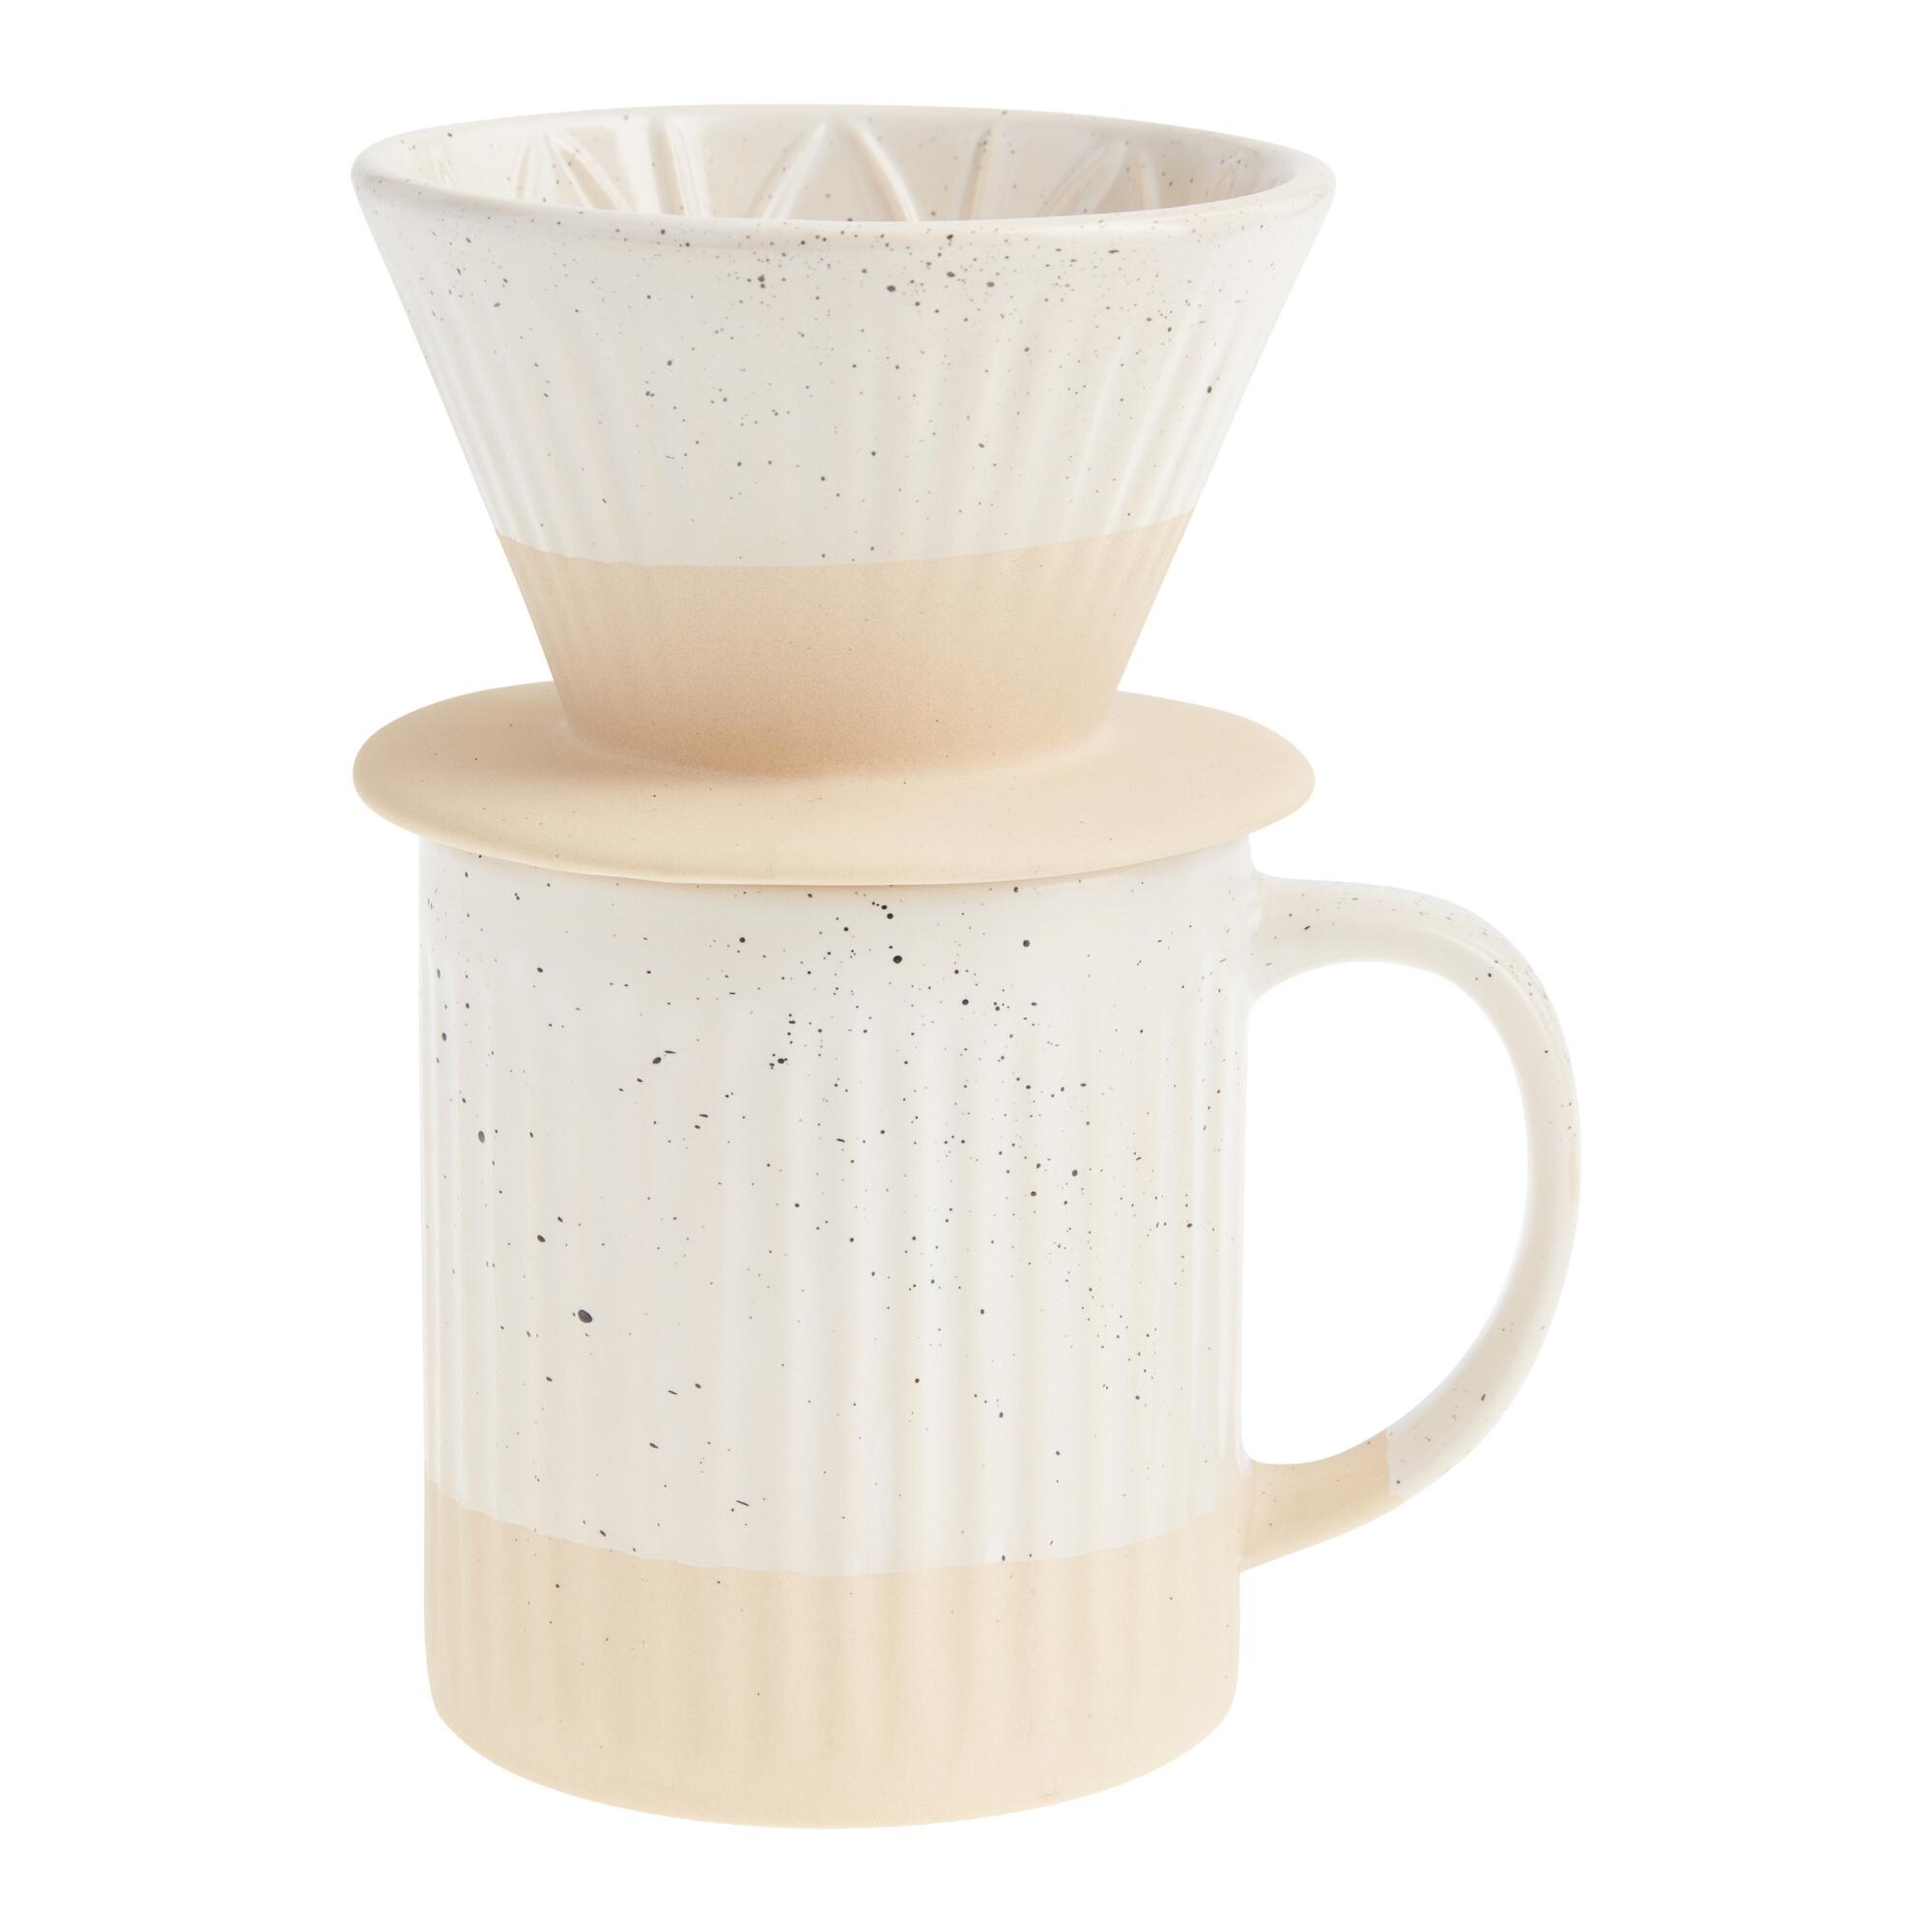 Farmhouse Ceramic Pour Over Coffee Mug and Filter Set - Stoneware by World Market